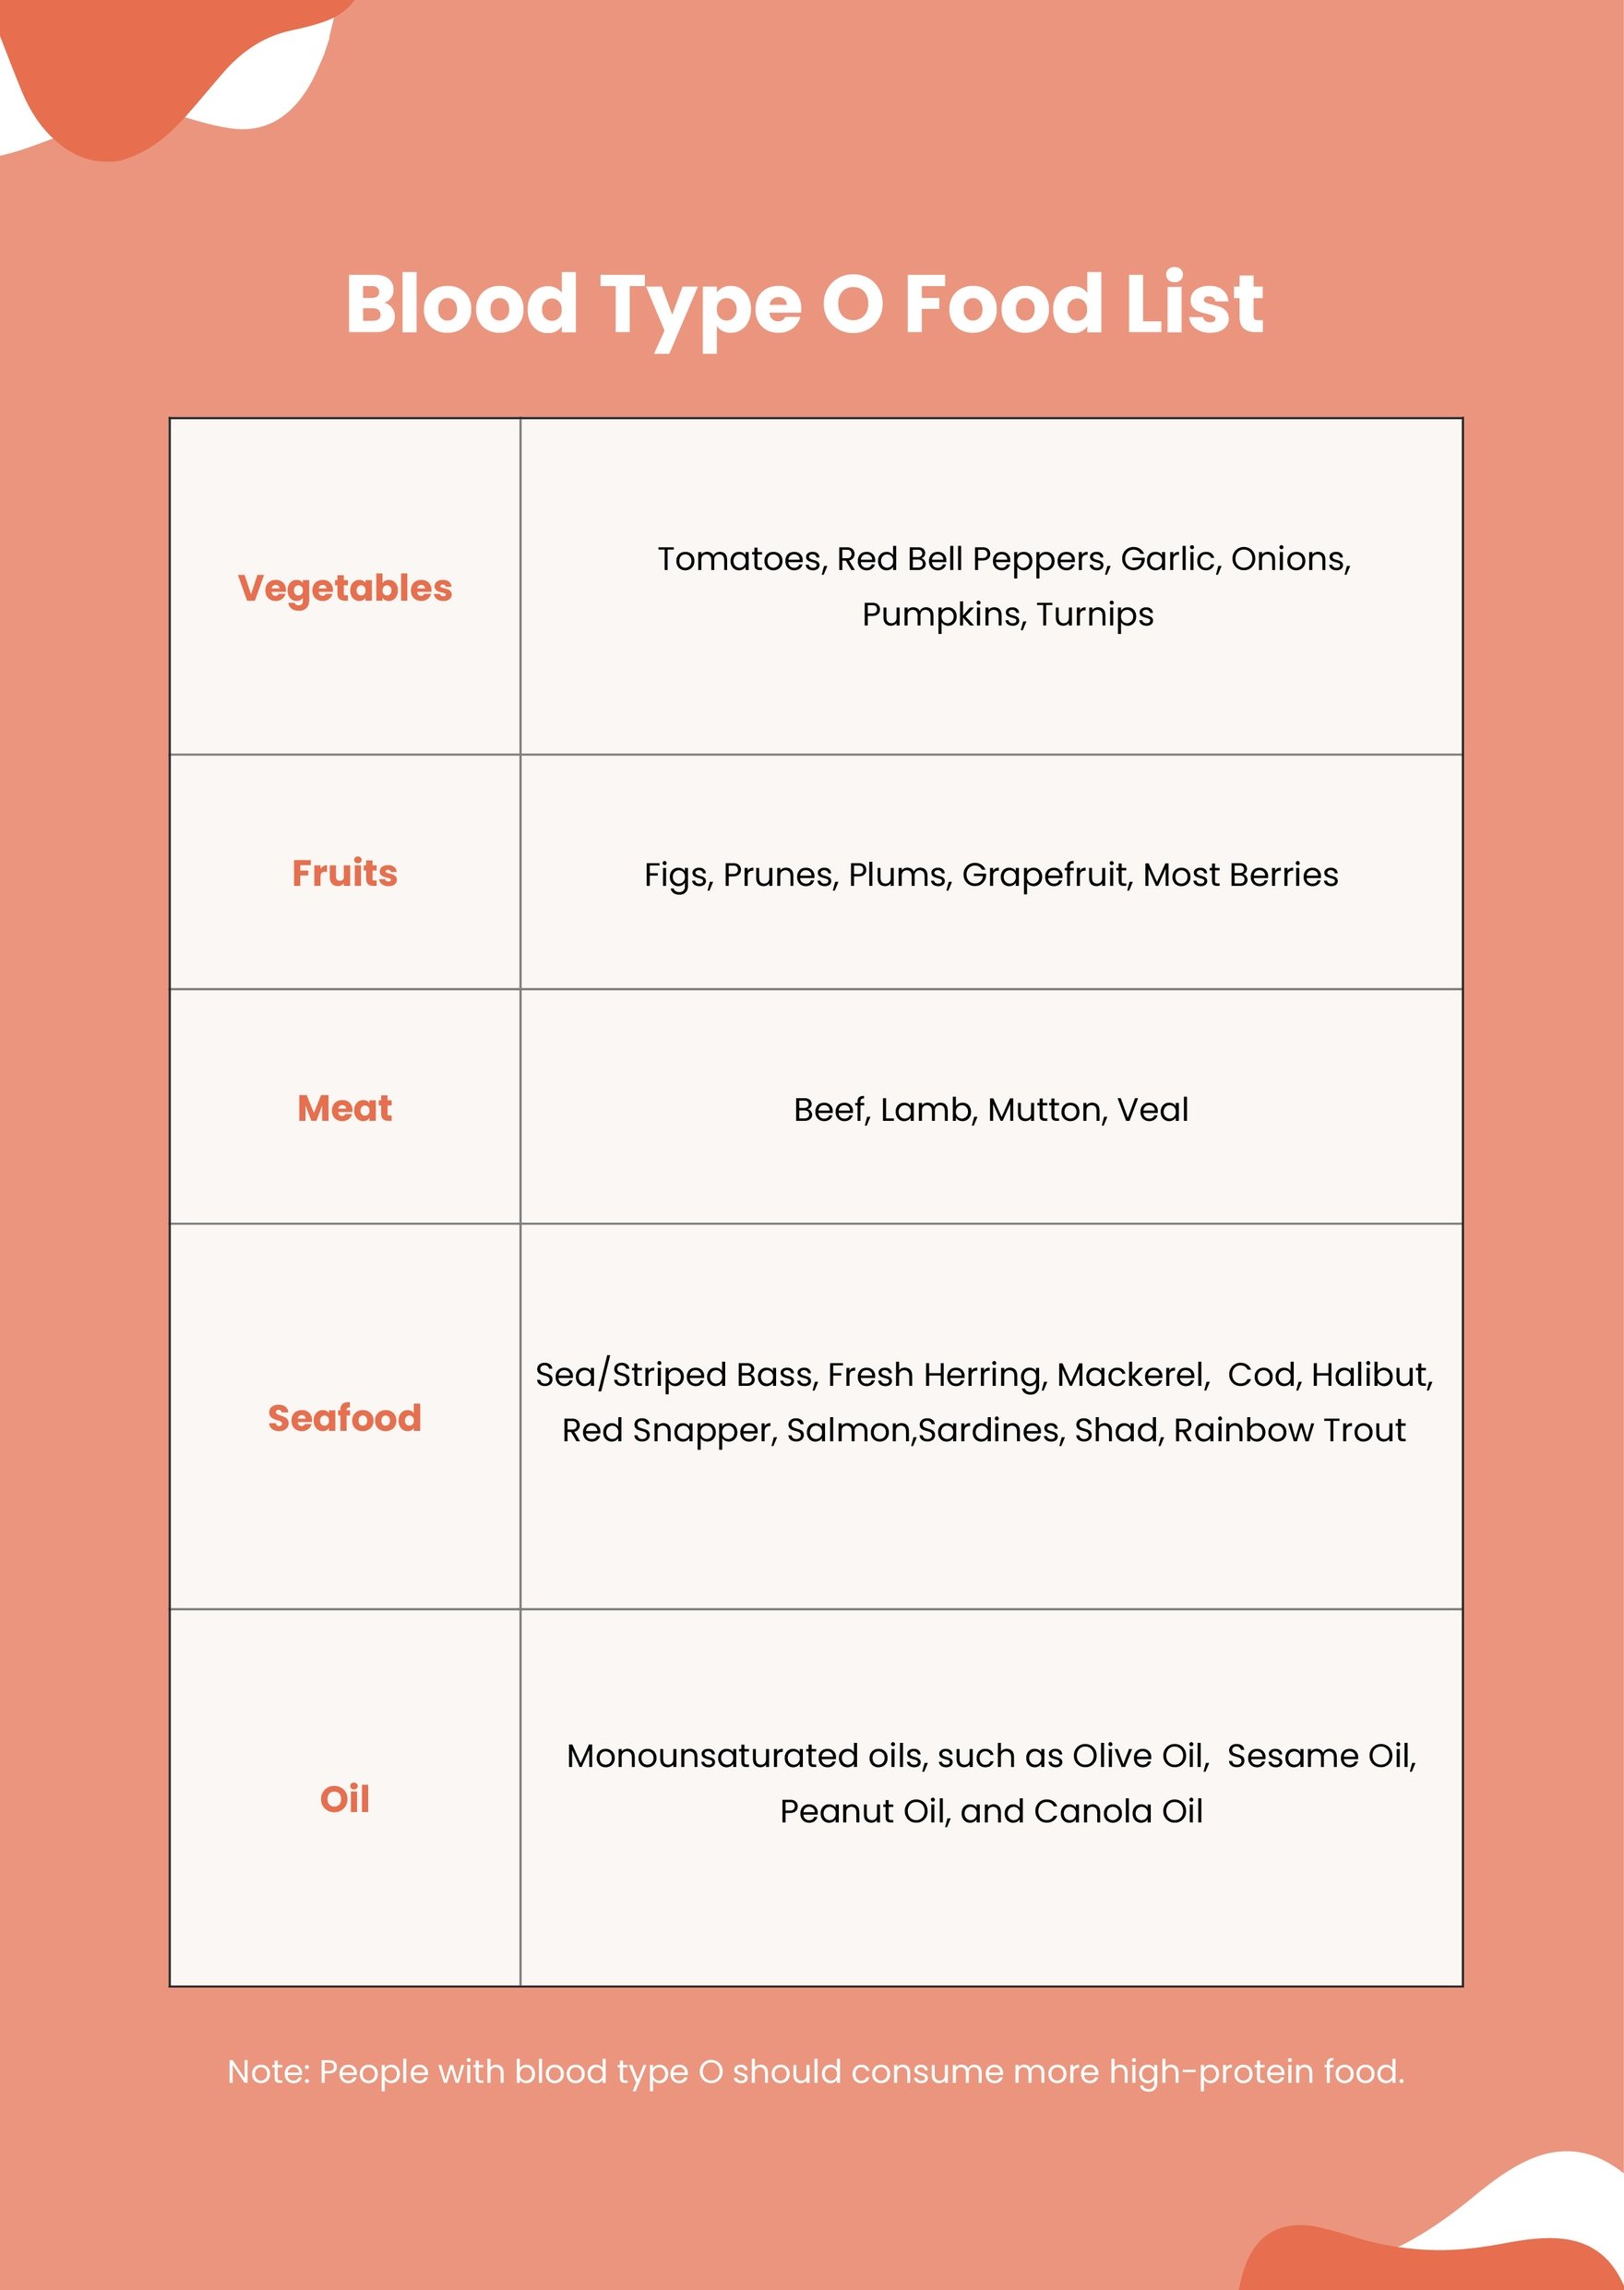 Blood Type O Food Chart in PDF, Illustrator